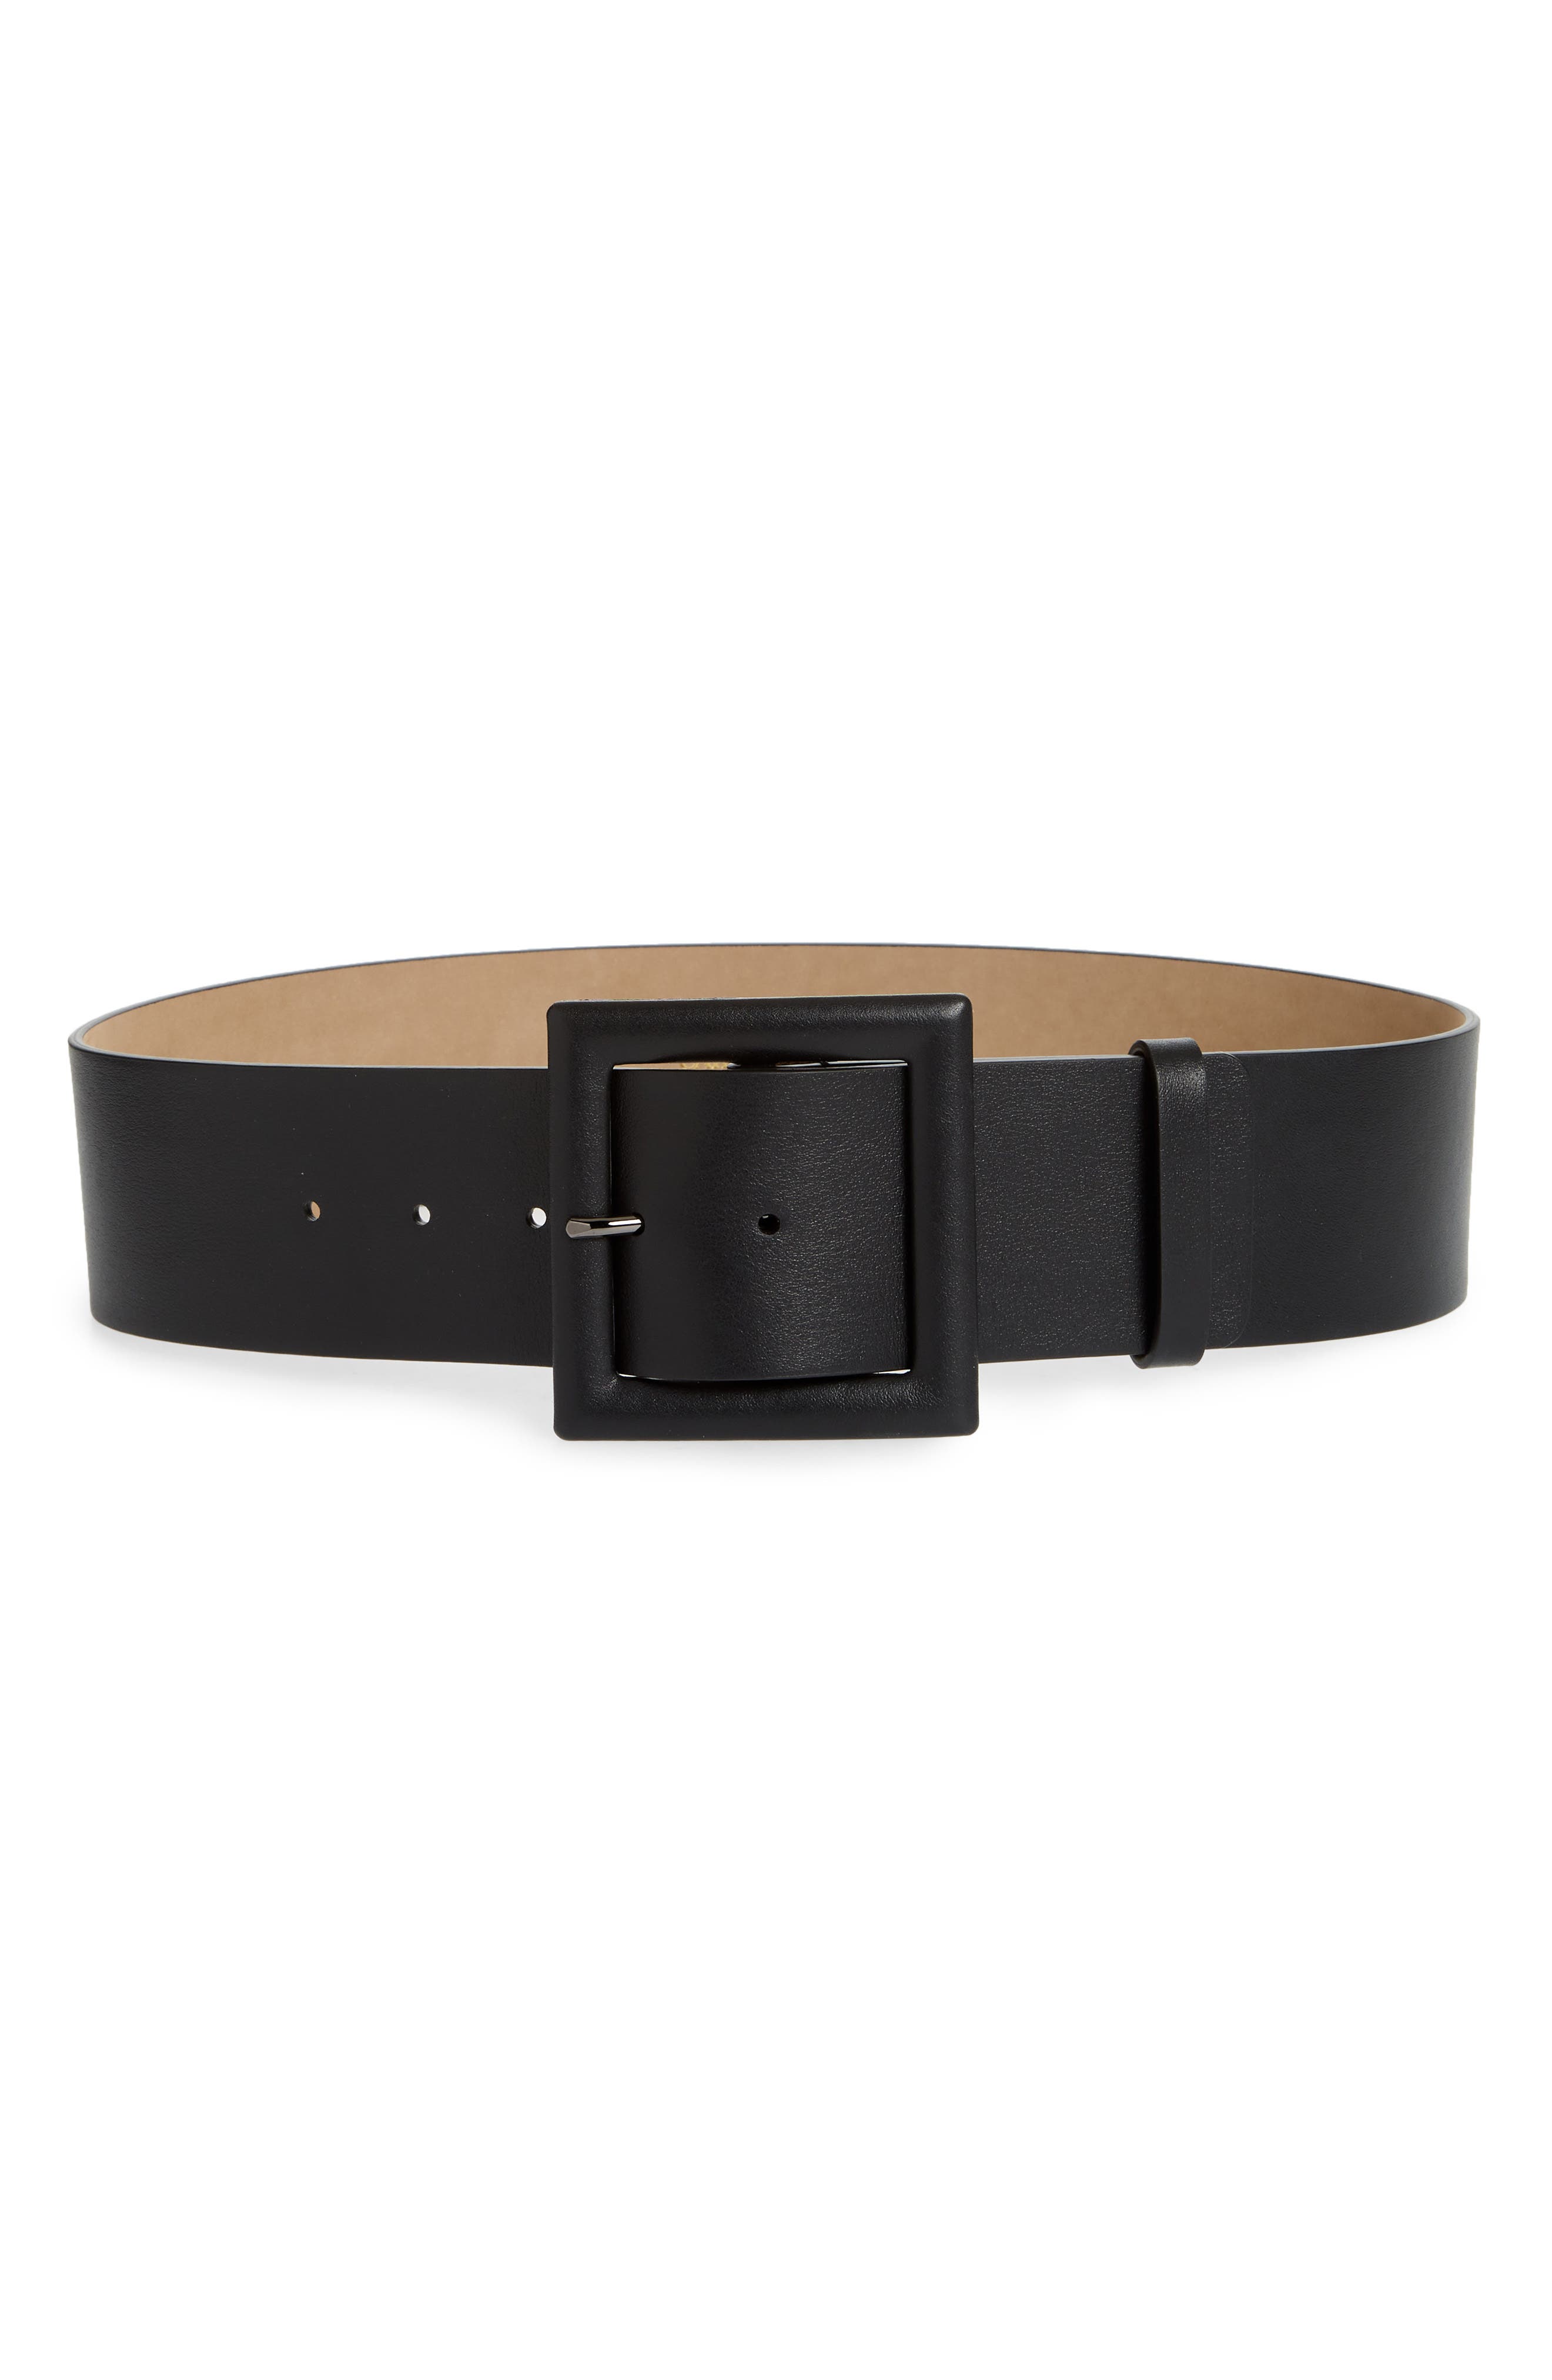 Carolina Herrera Leather Belt in Black at Nordstrom, Size X-Small